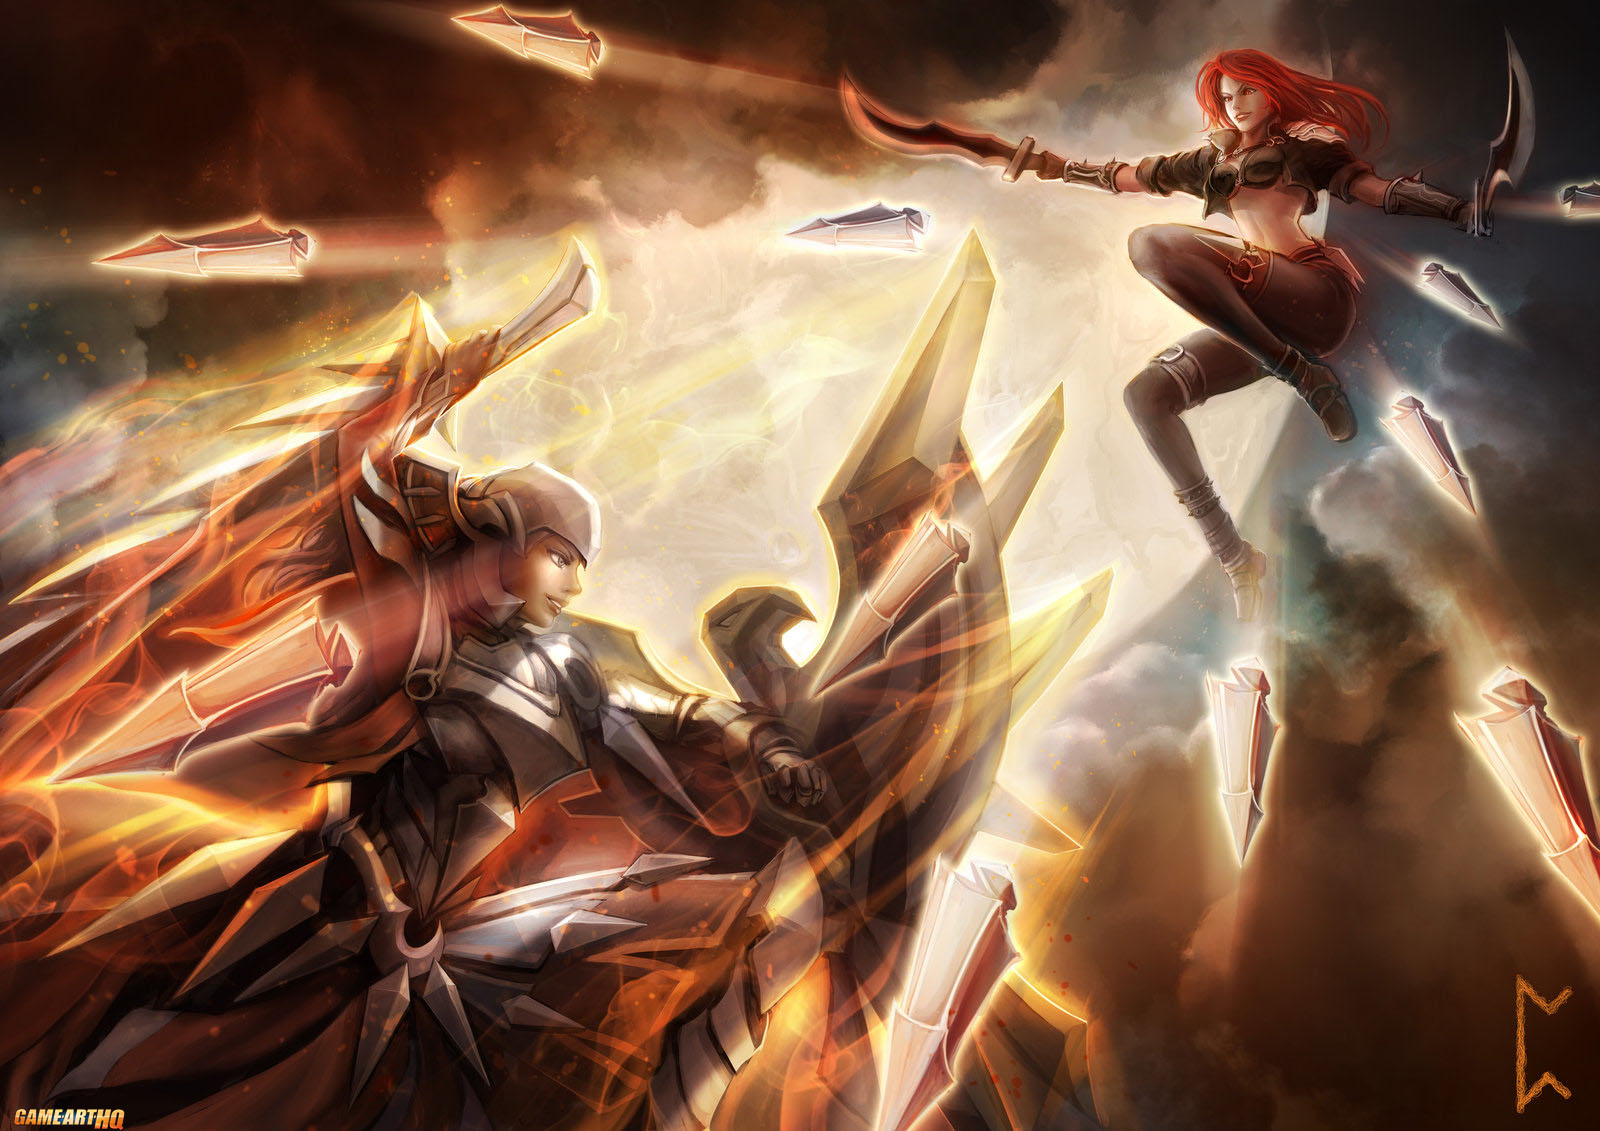 Katarina the Sinister Blade vs. Leona the Radiant Dawn League of Legends Fan Art